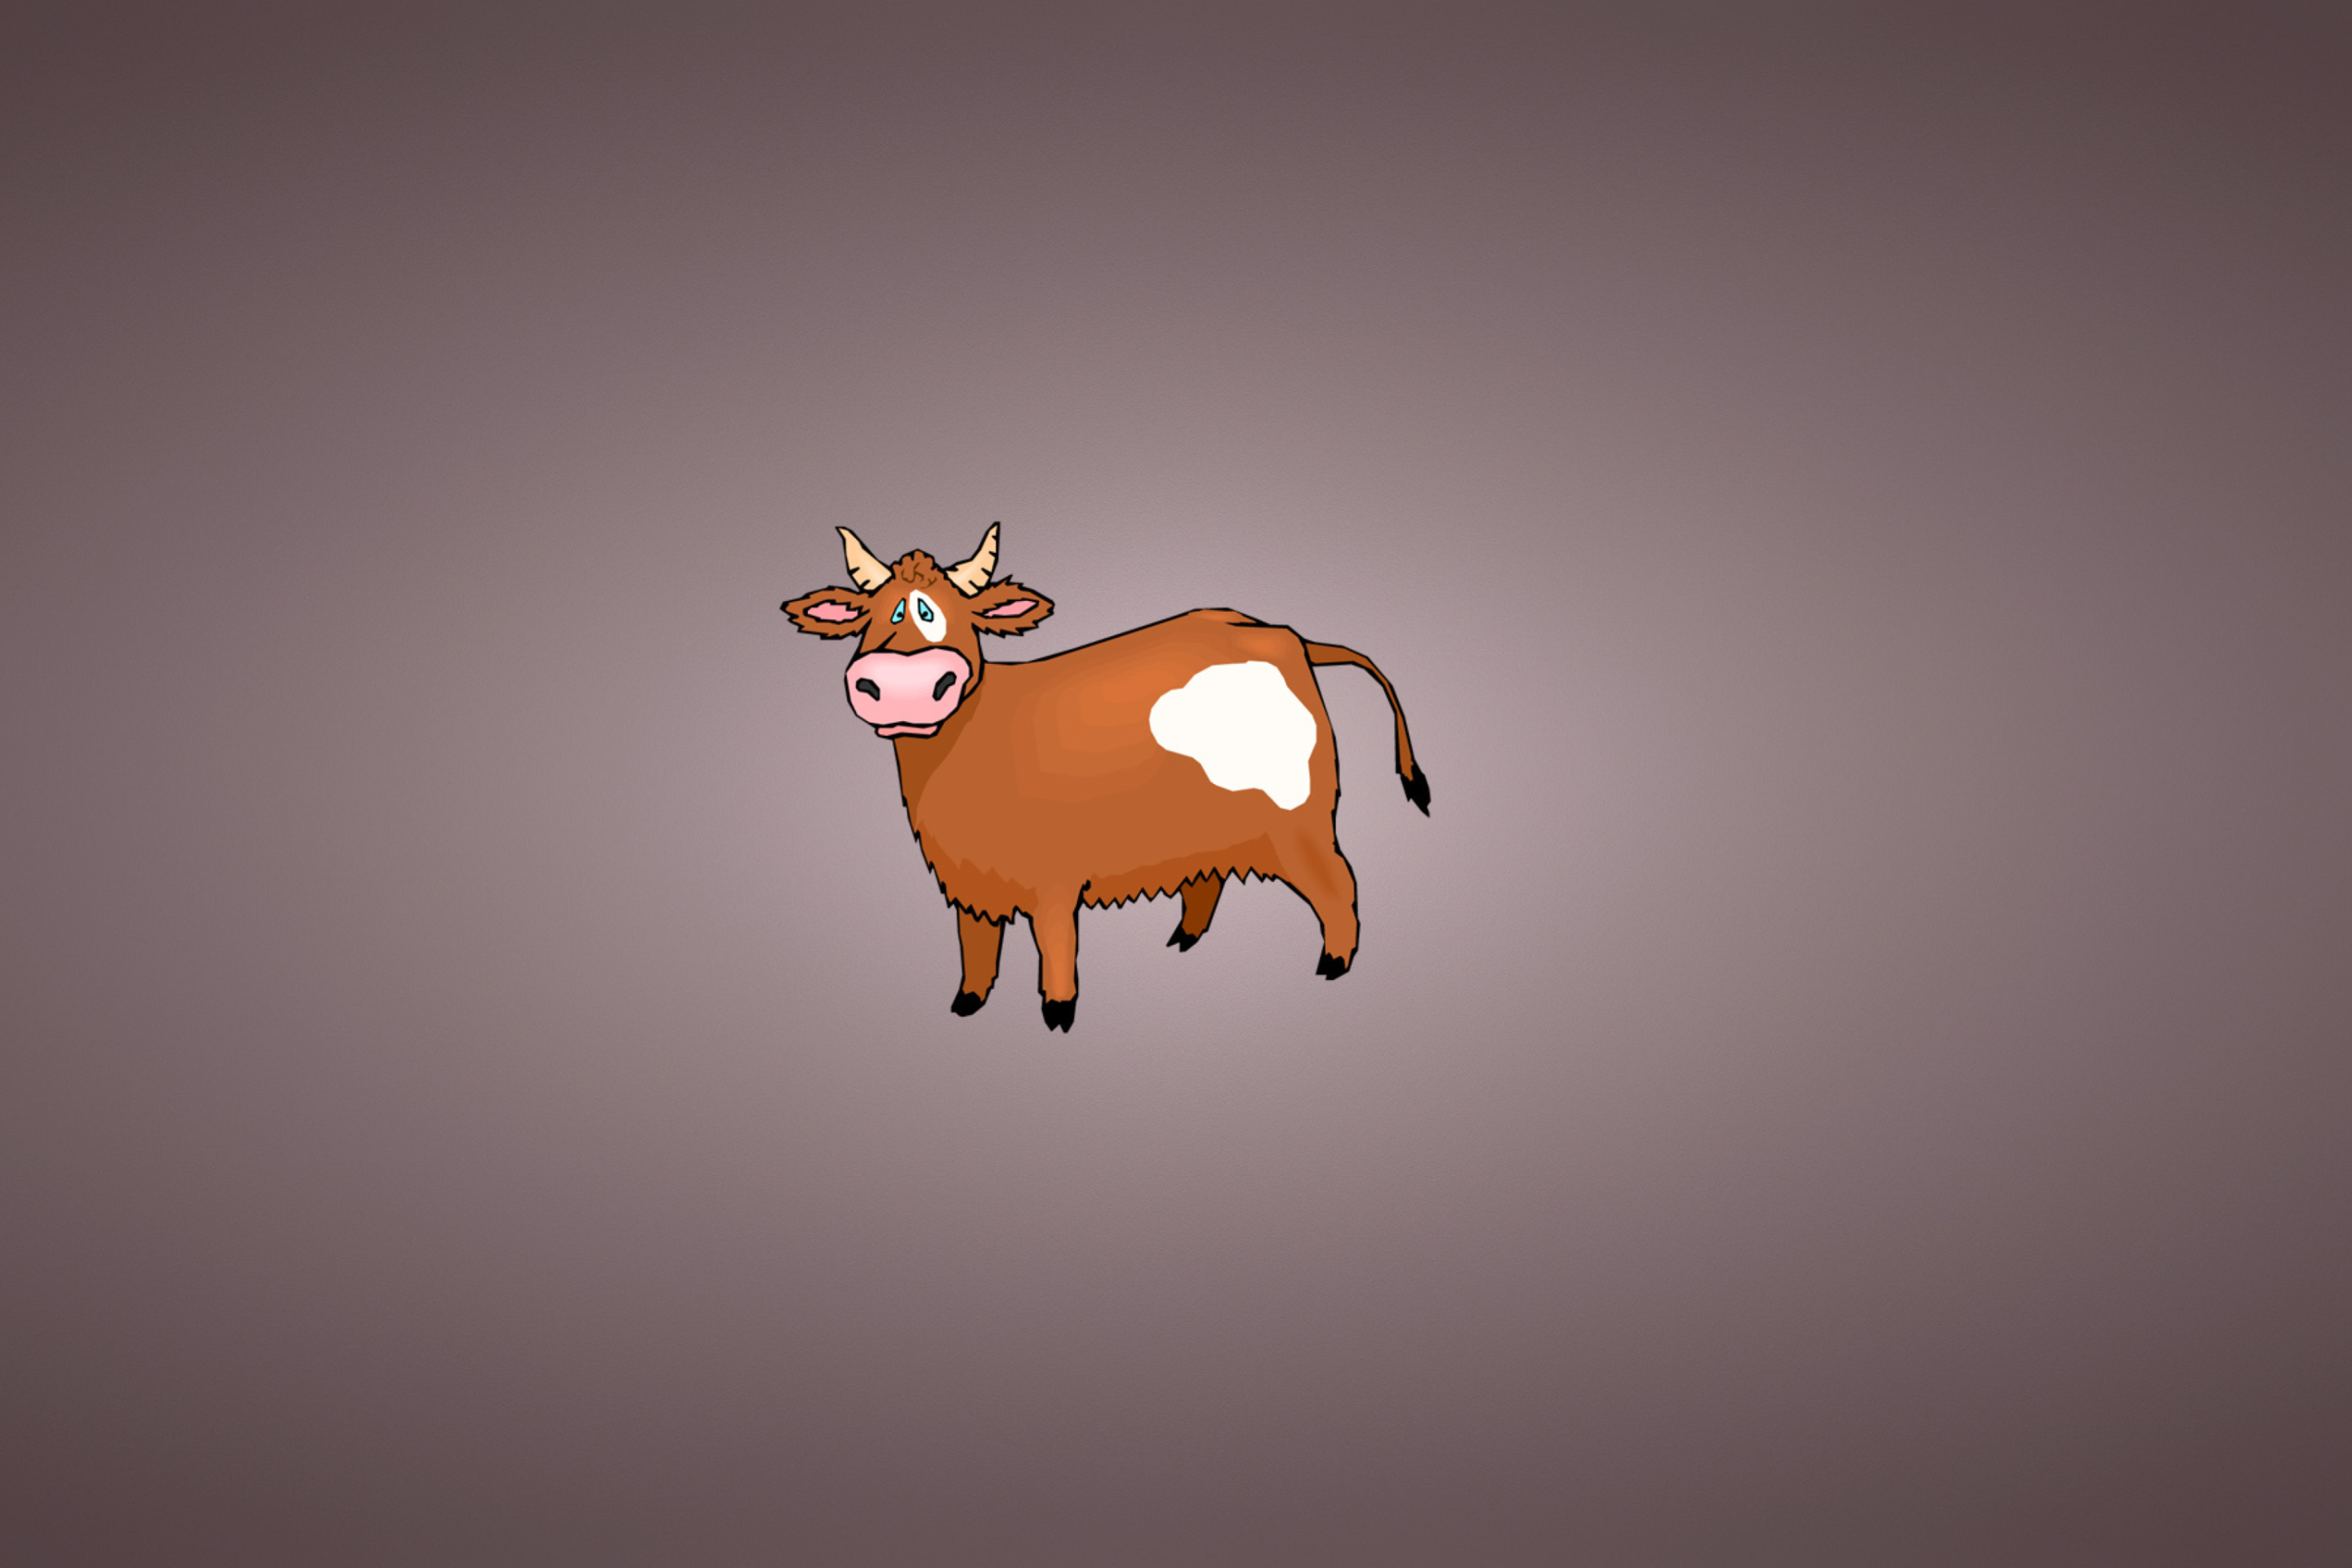 Funny Cow Illustration wallpaper 2880x1920